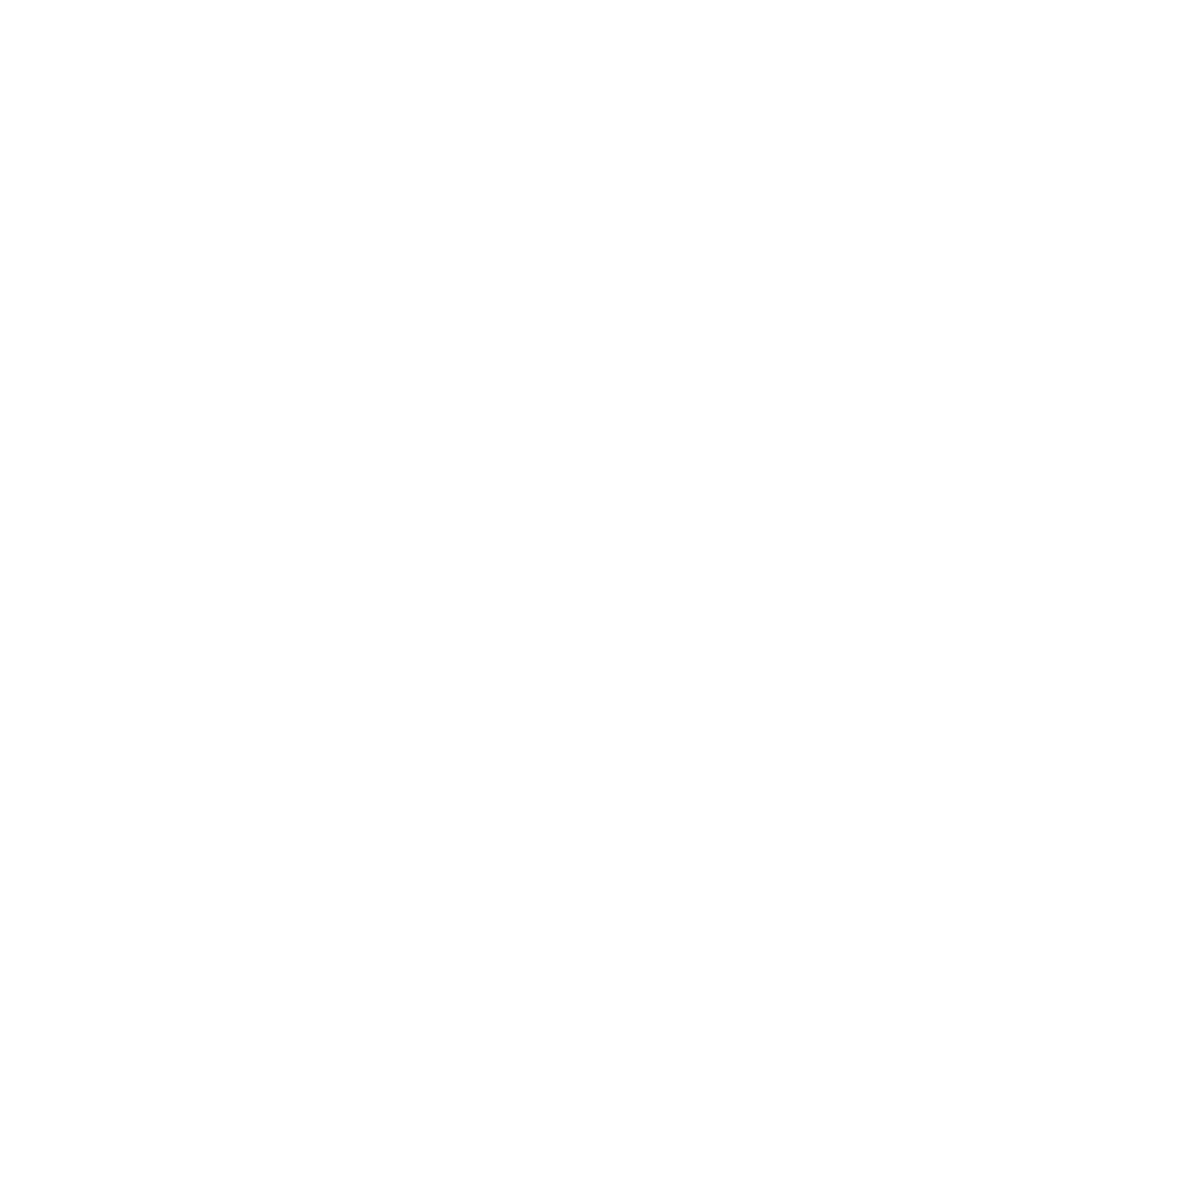 Runaways Run Club